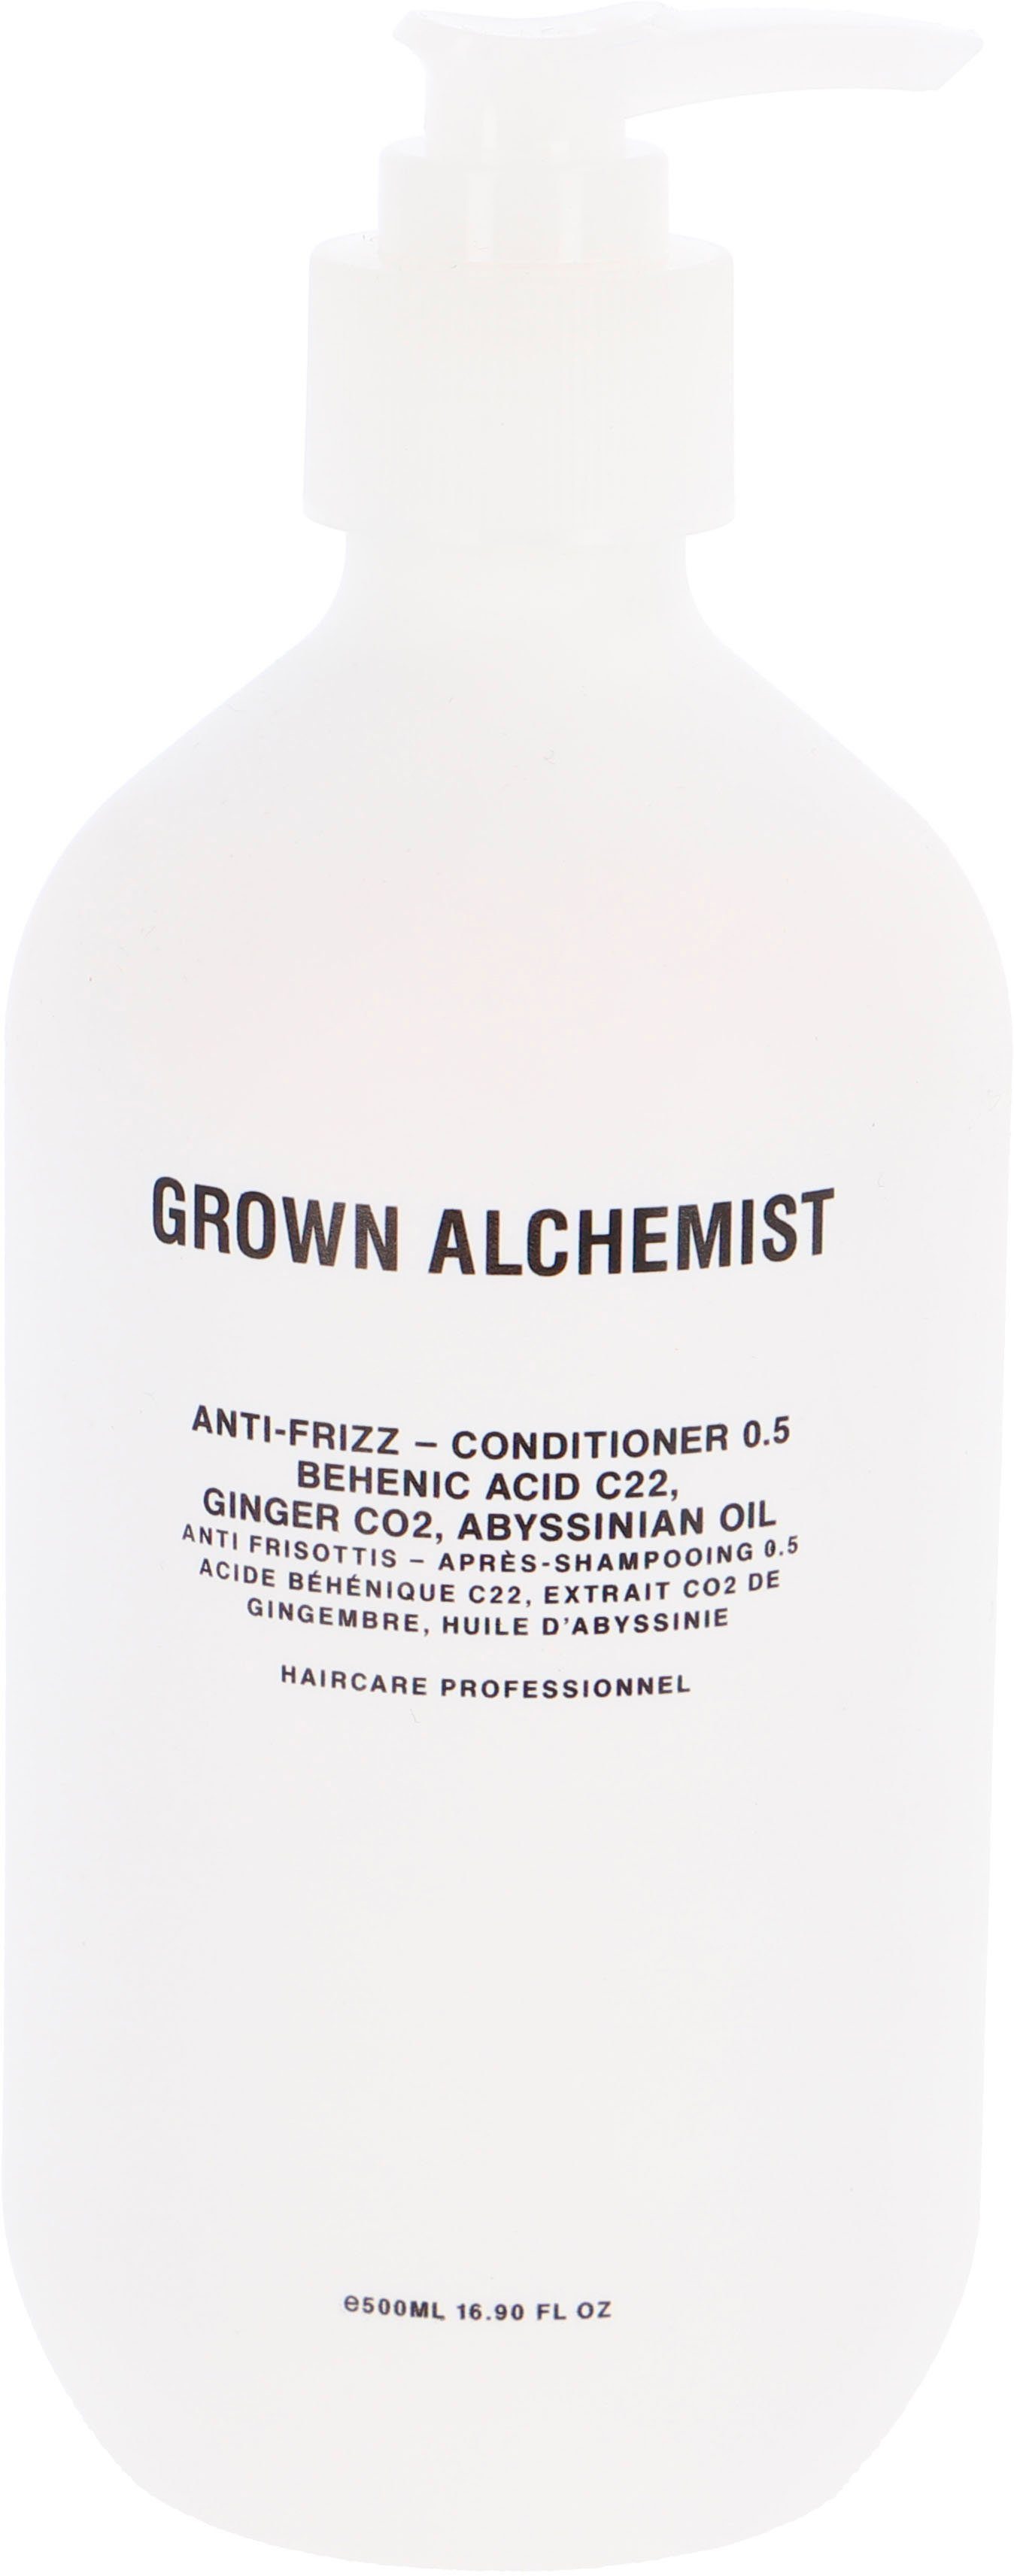 Acid Haarspülung Conditioner - Ginger CO2, Behenic Anti-Frizz GROWN 0.5:, C22, ALCHEMIST Oil Abyssinian